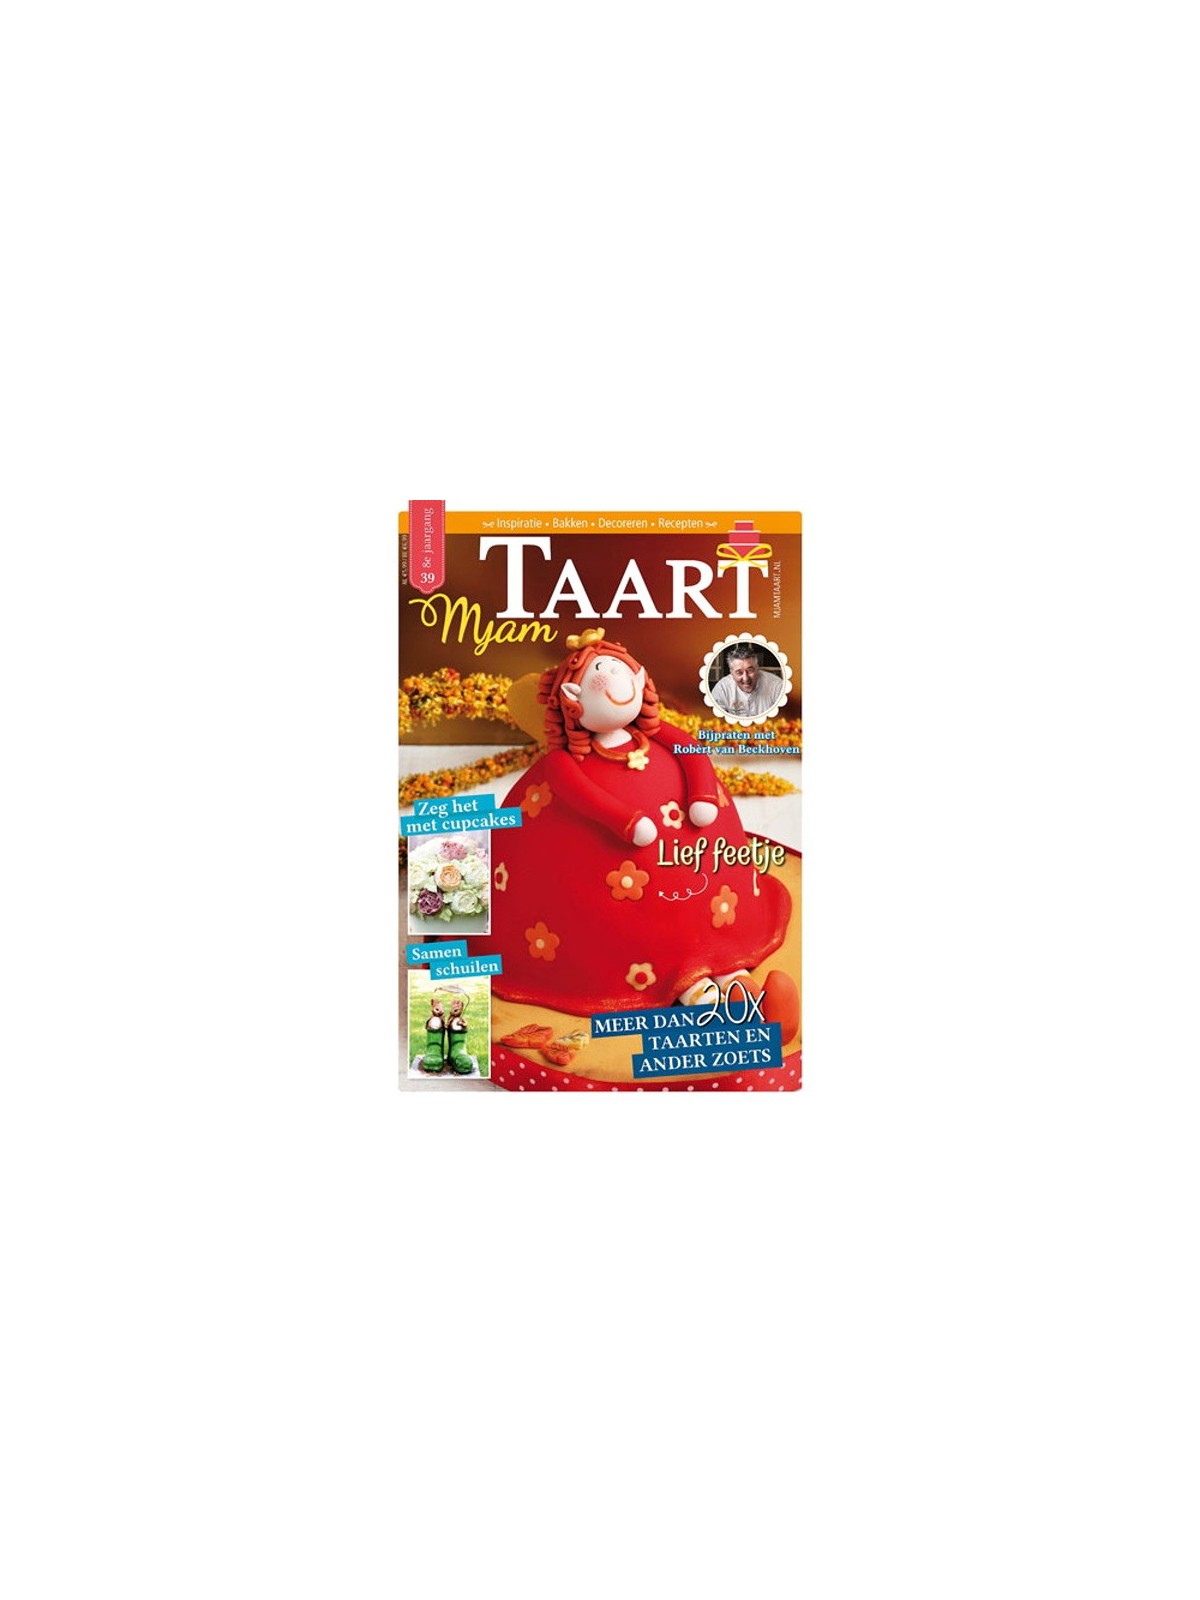 MjamTaart! Cake Decorating Magazine Autumn 2016